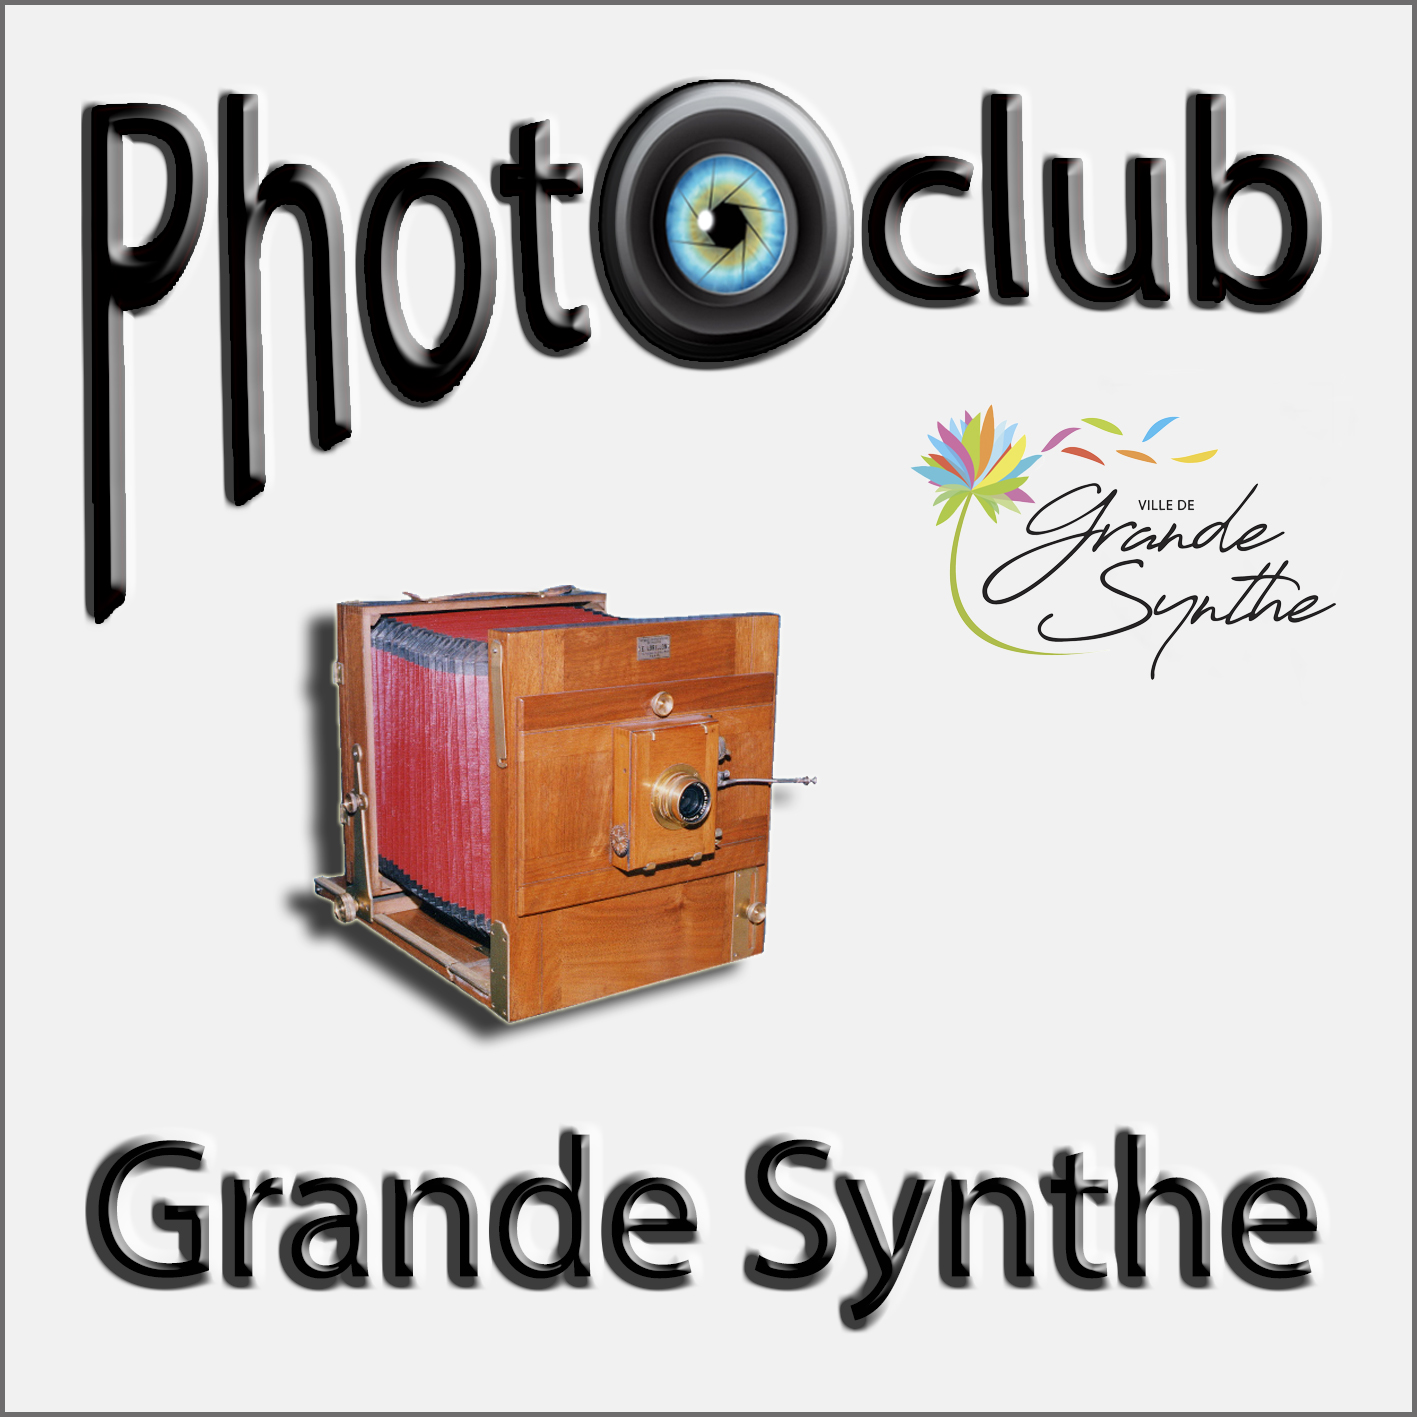 Photo Club de Grande-Synthe